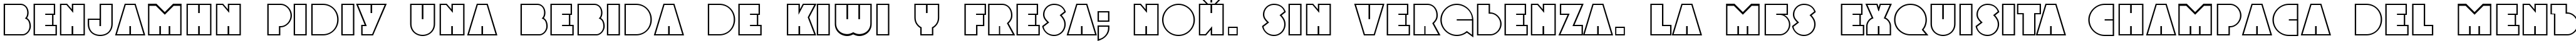 Пример написания шрифтом a_GrotoOtl текста на испанском